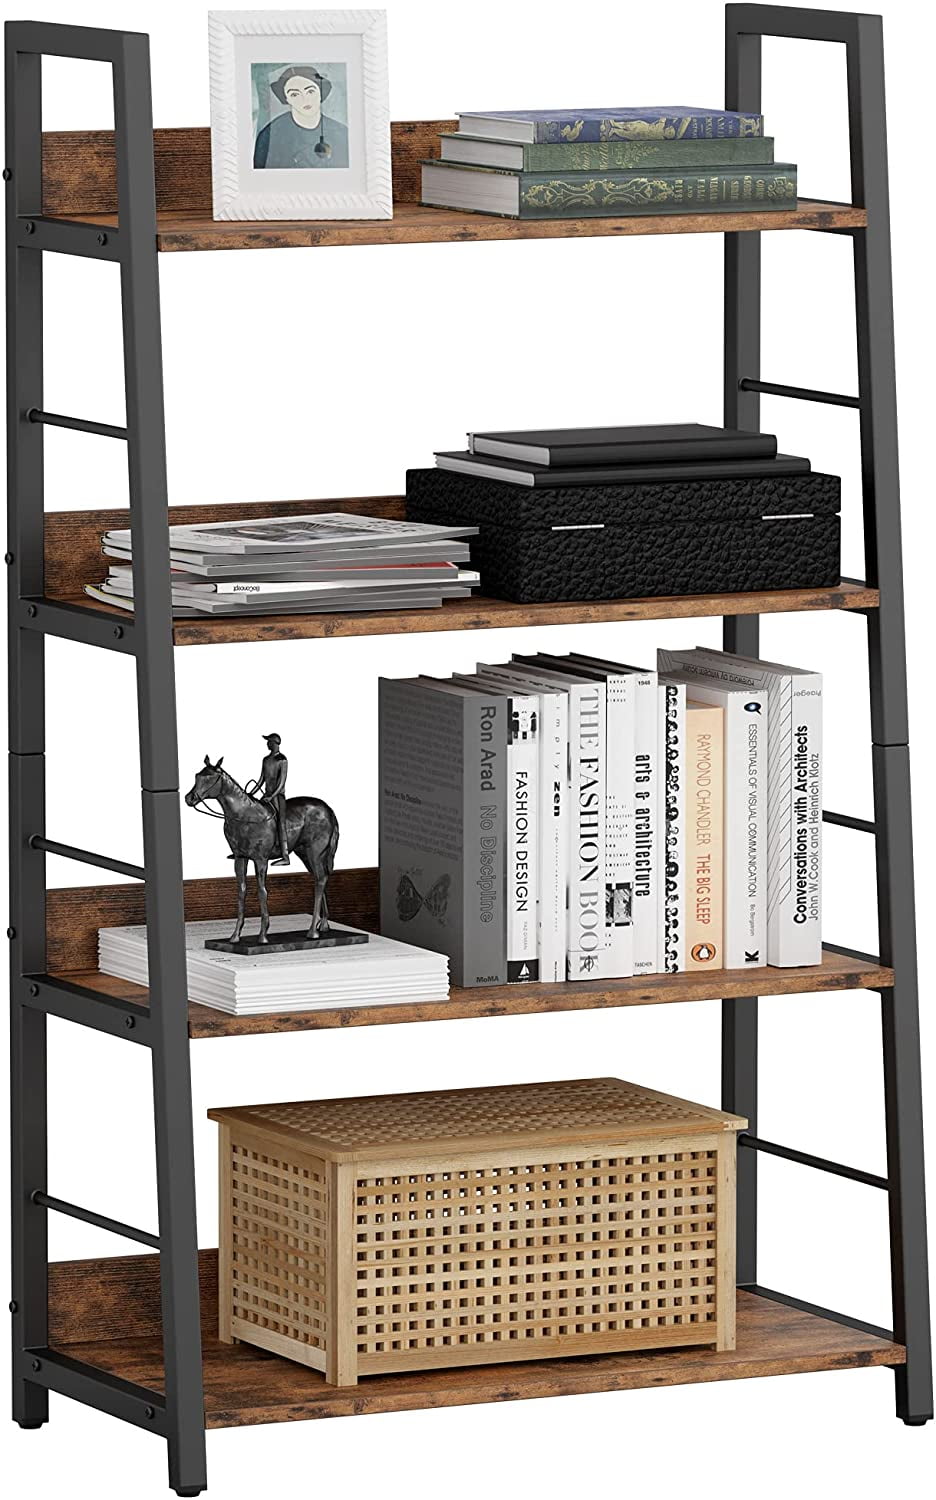 Industrial Bookcase Storage Rack for Living Room Bedroom Farm House 3 Tier Ladder Shelf IRONCK Bookshelf Office Rustic Home Decor Kitchen